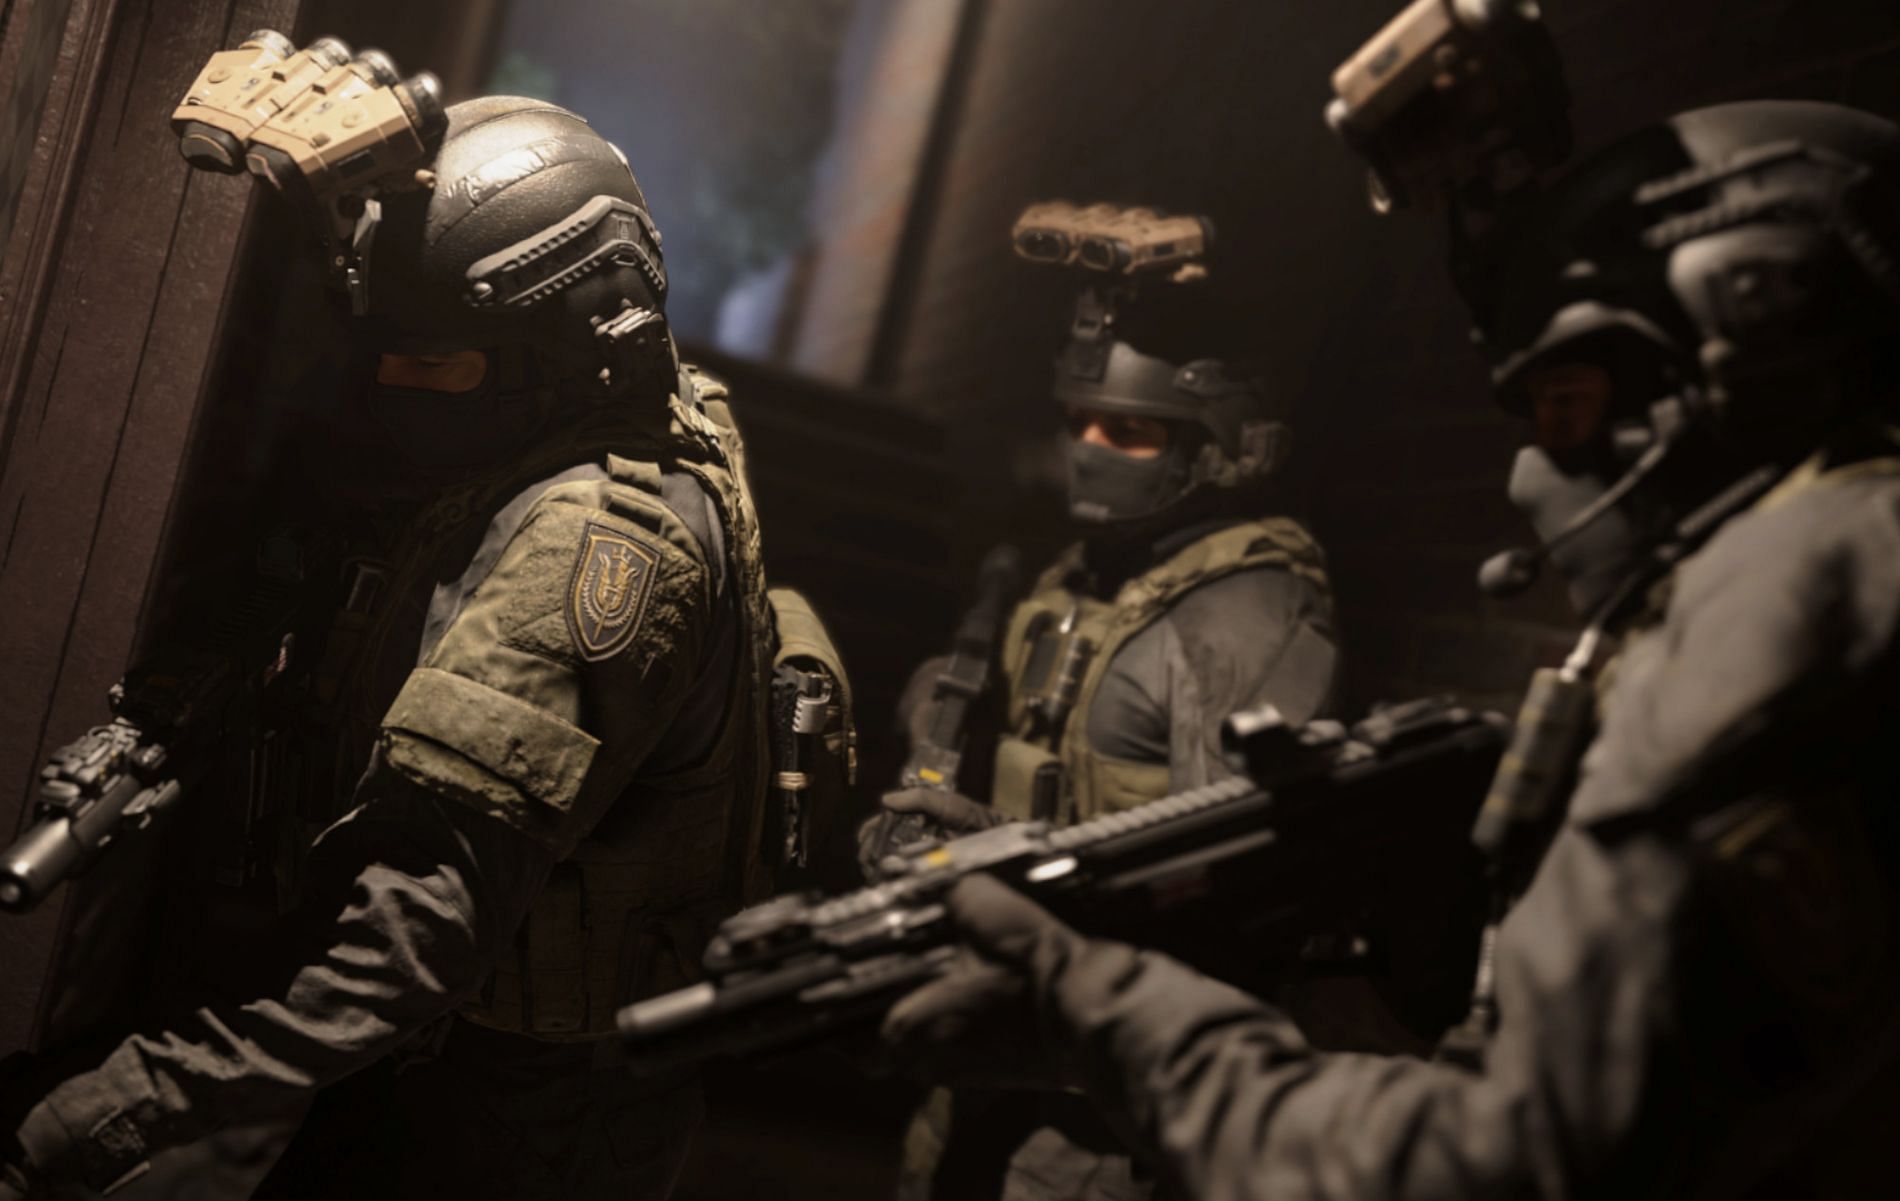 Call of Duty Modern Warfare 2 - PS5 vs PS4 Pro vs PS4 - Beta First Look! 